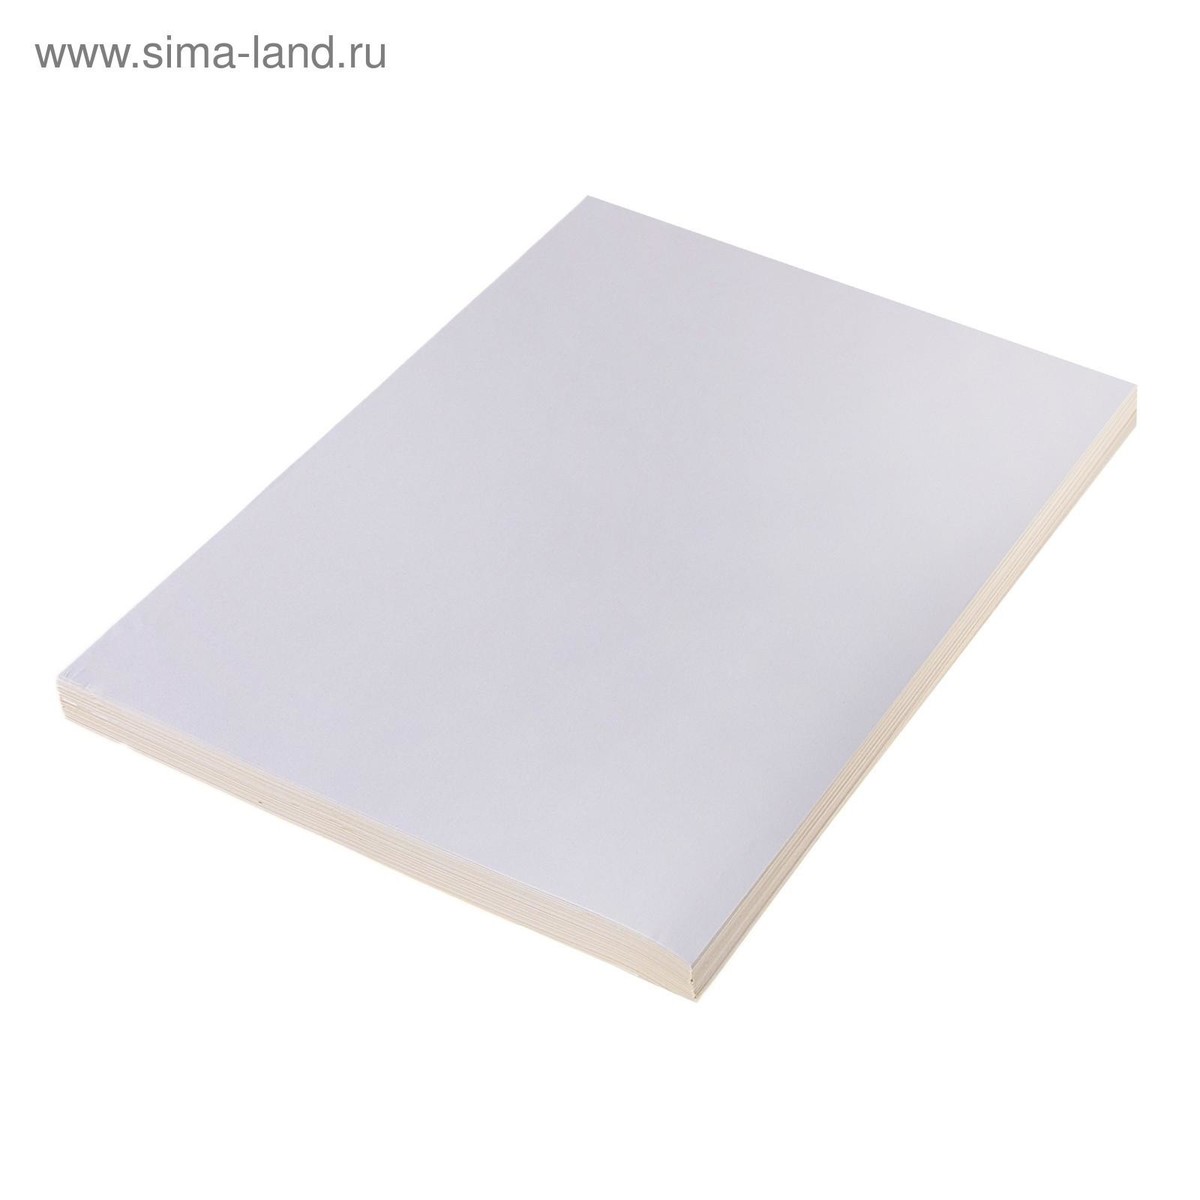 Бумага а4, 25 листов, 80 г/м, самоклеящаяся, белая матовая краска для потолков белорро дискаунт матовая белая 14кг